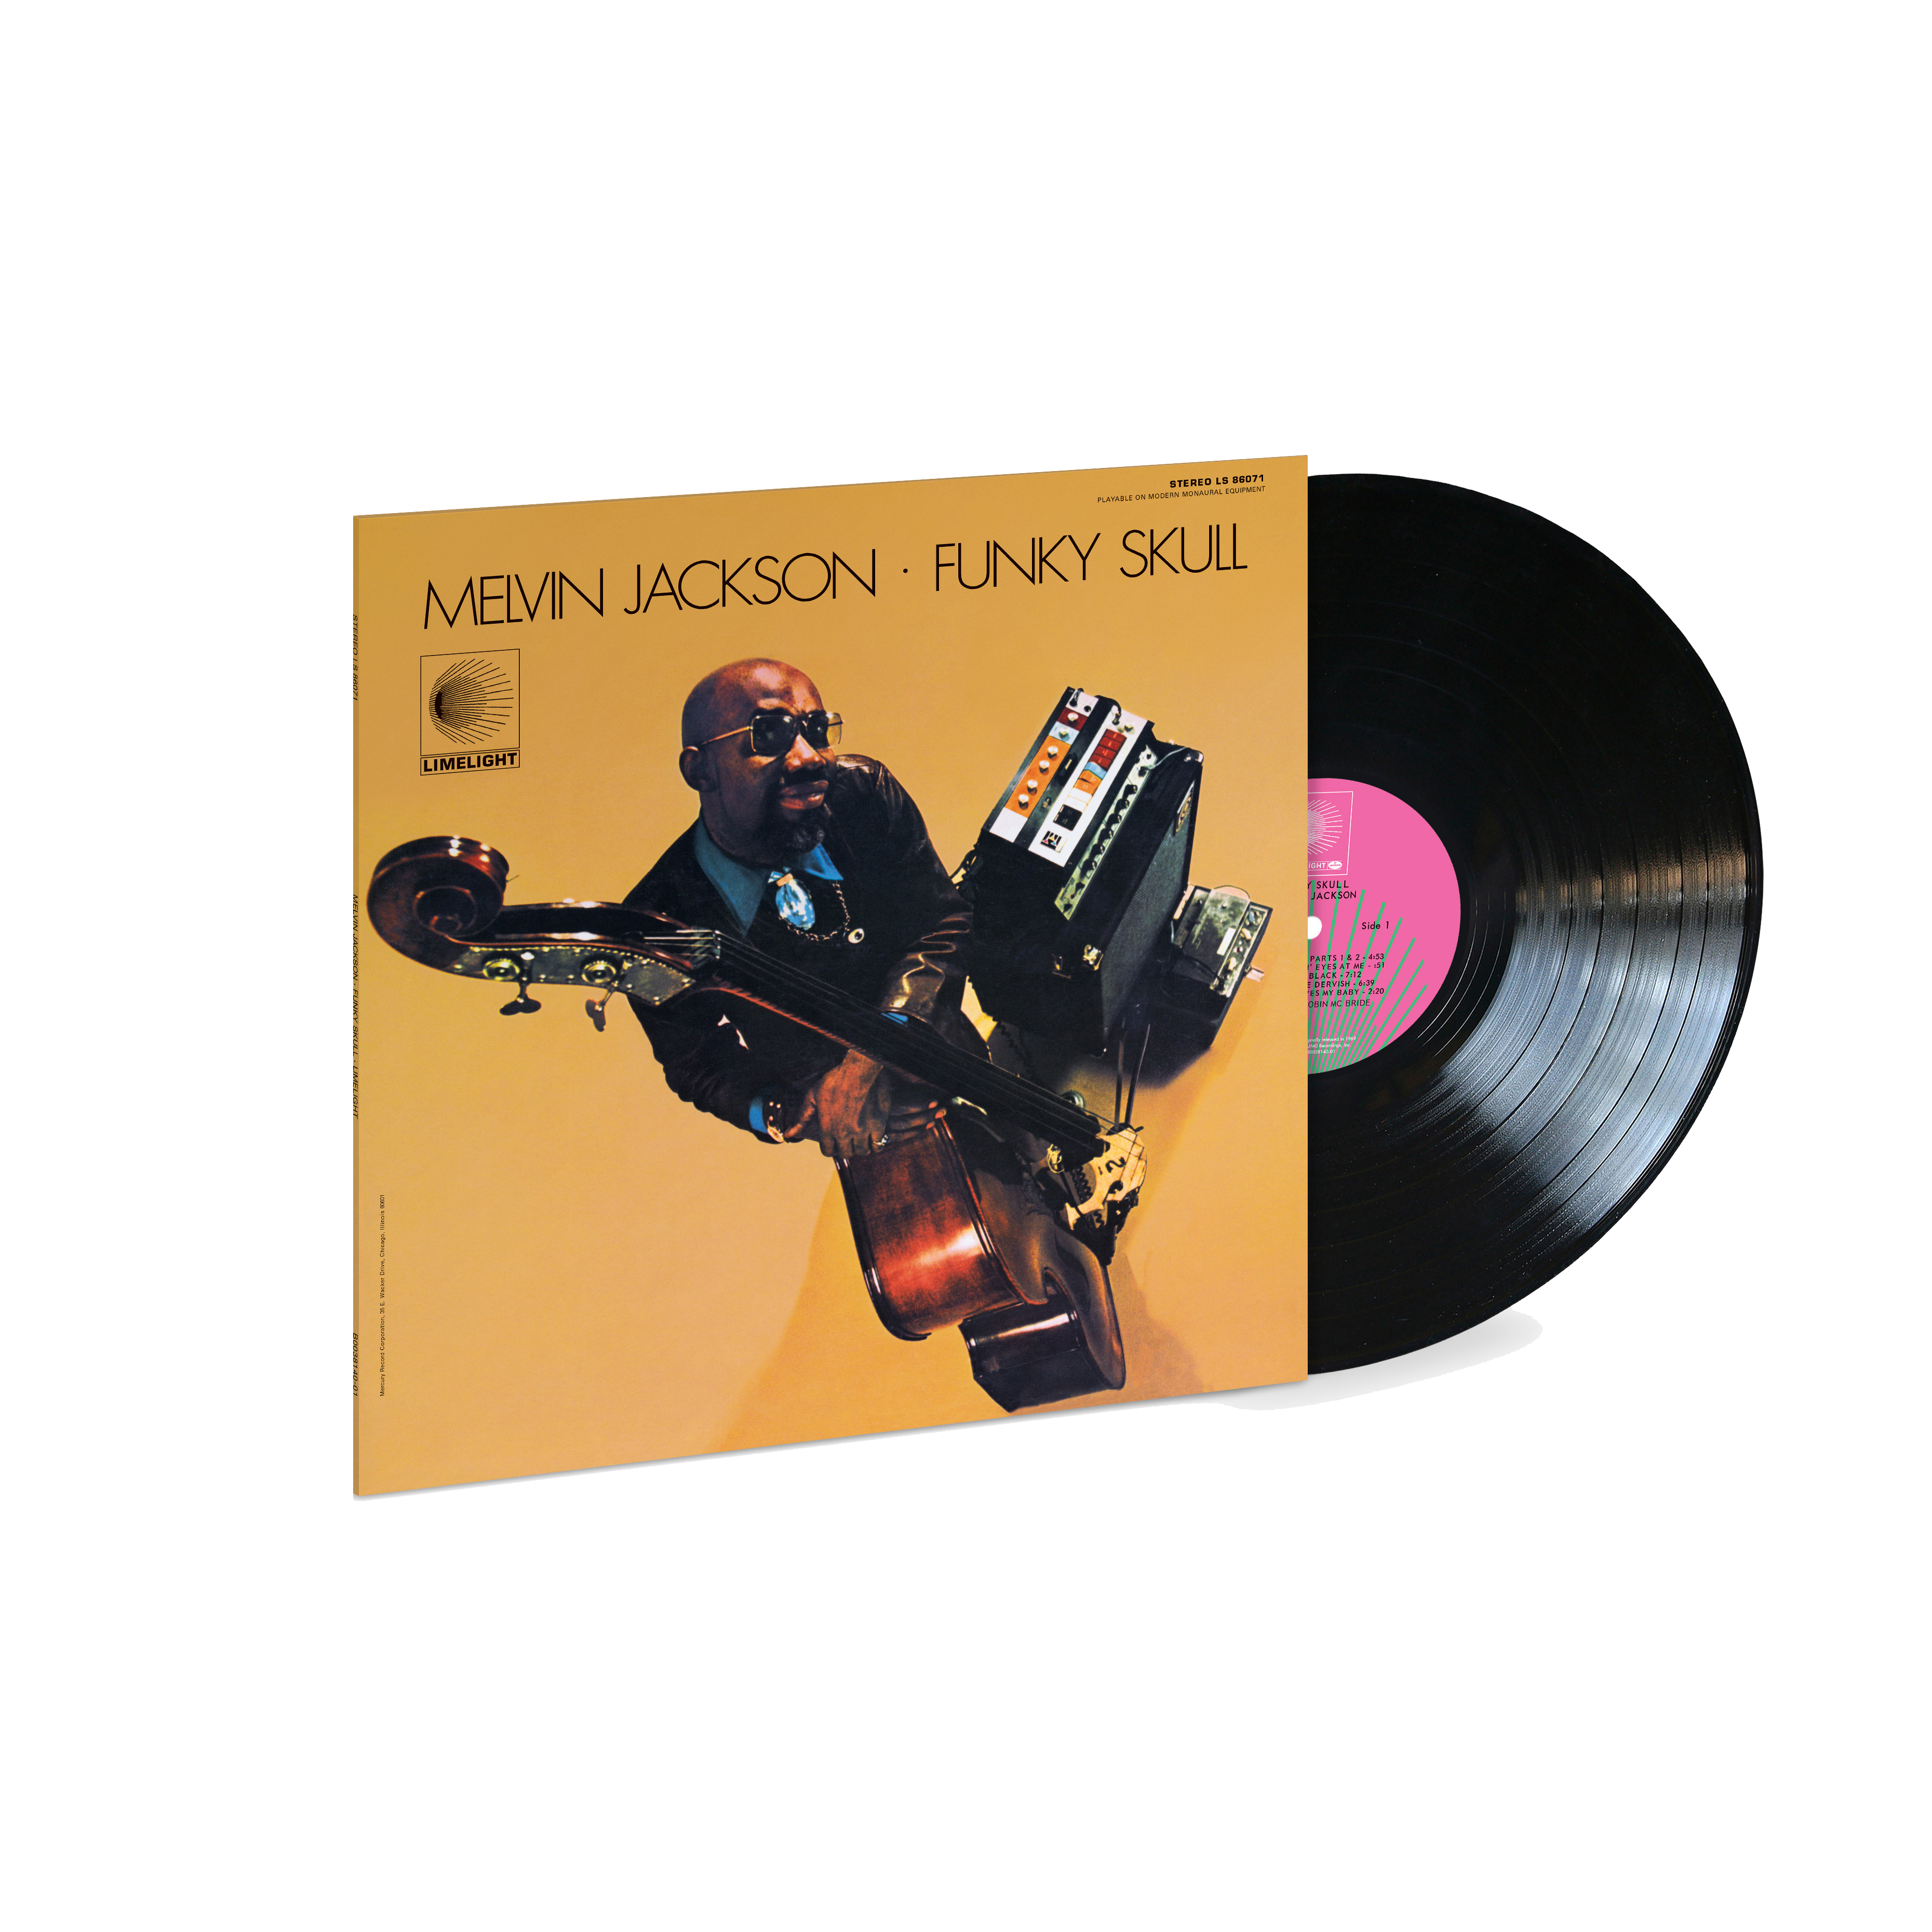 Melvin Jackson - Funky Skull (Verve By Request): Vinyl LP